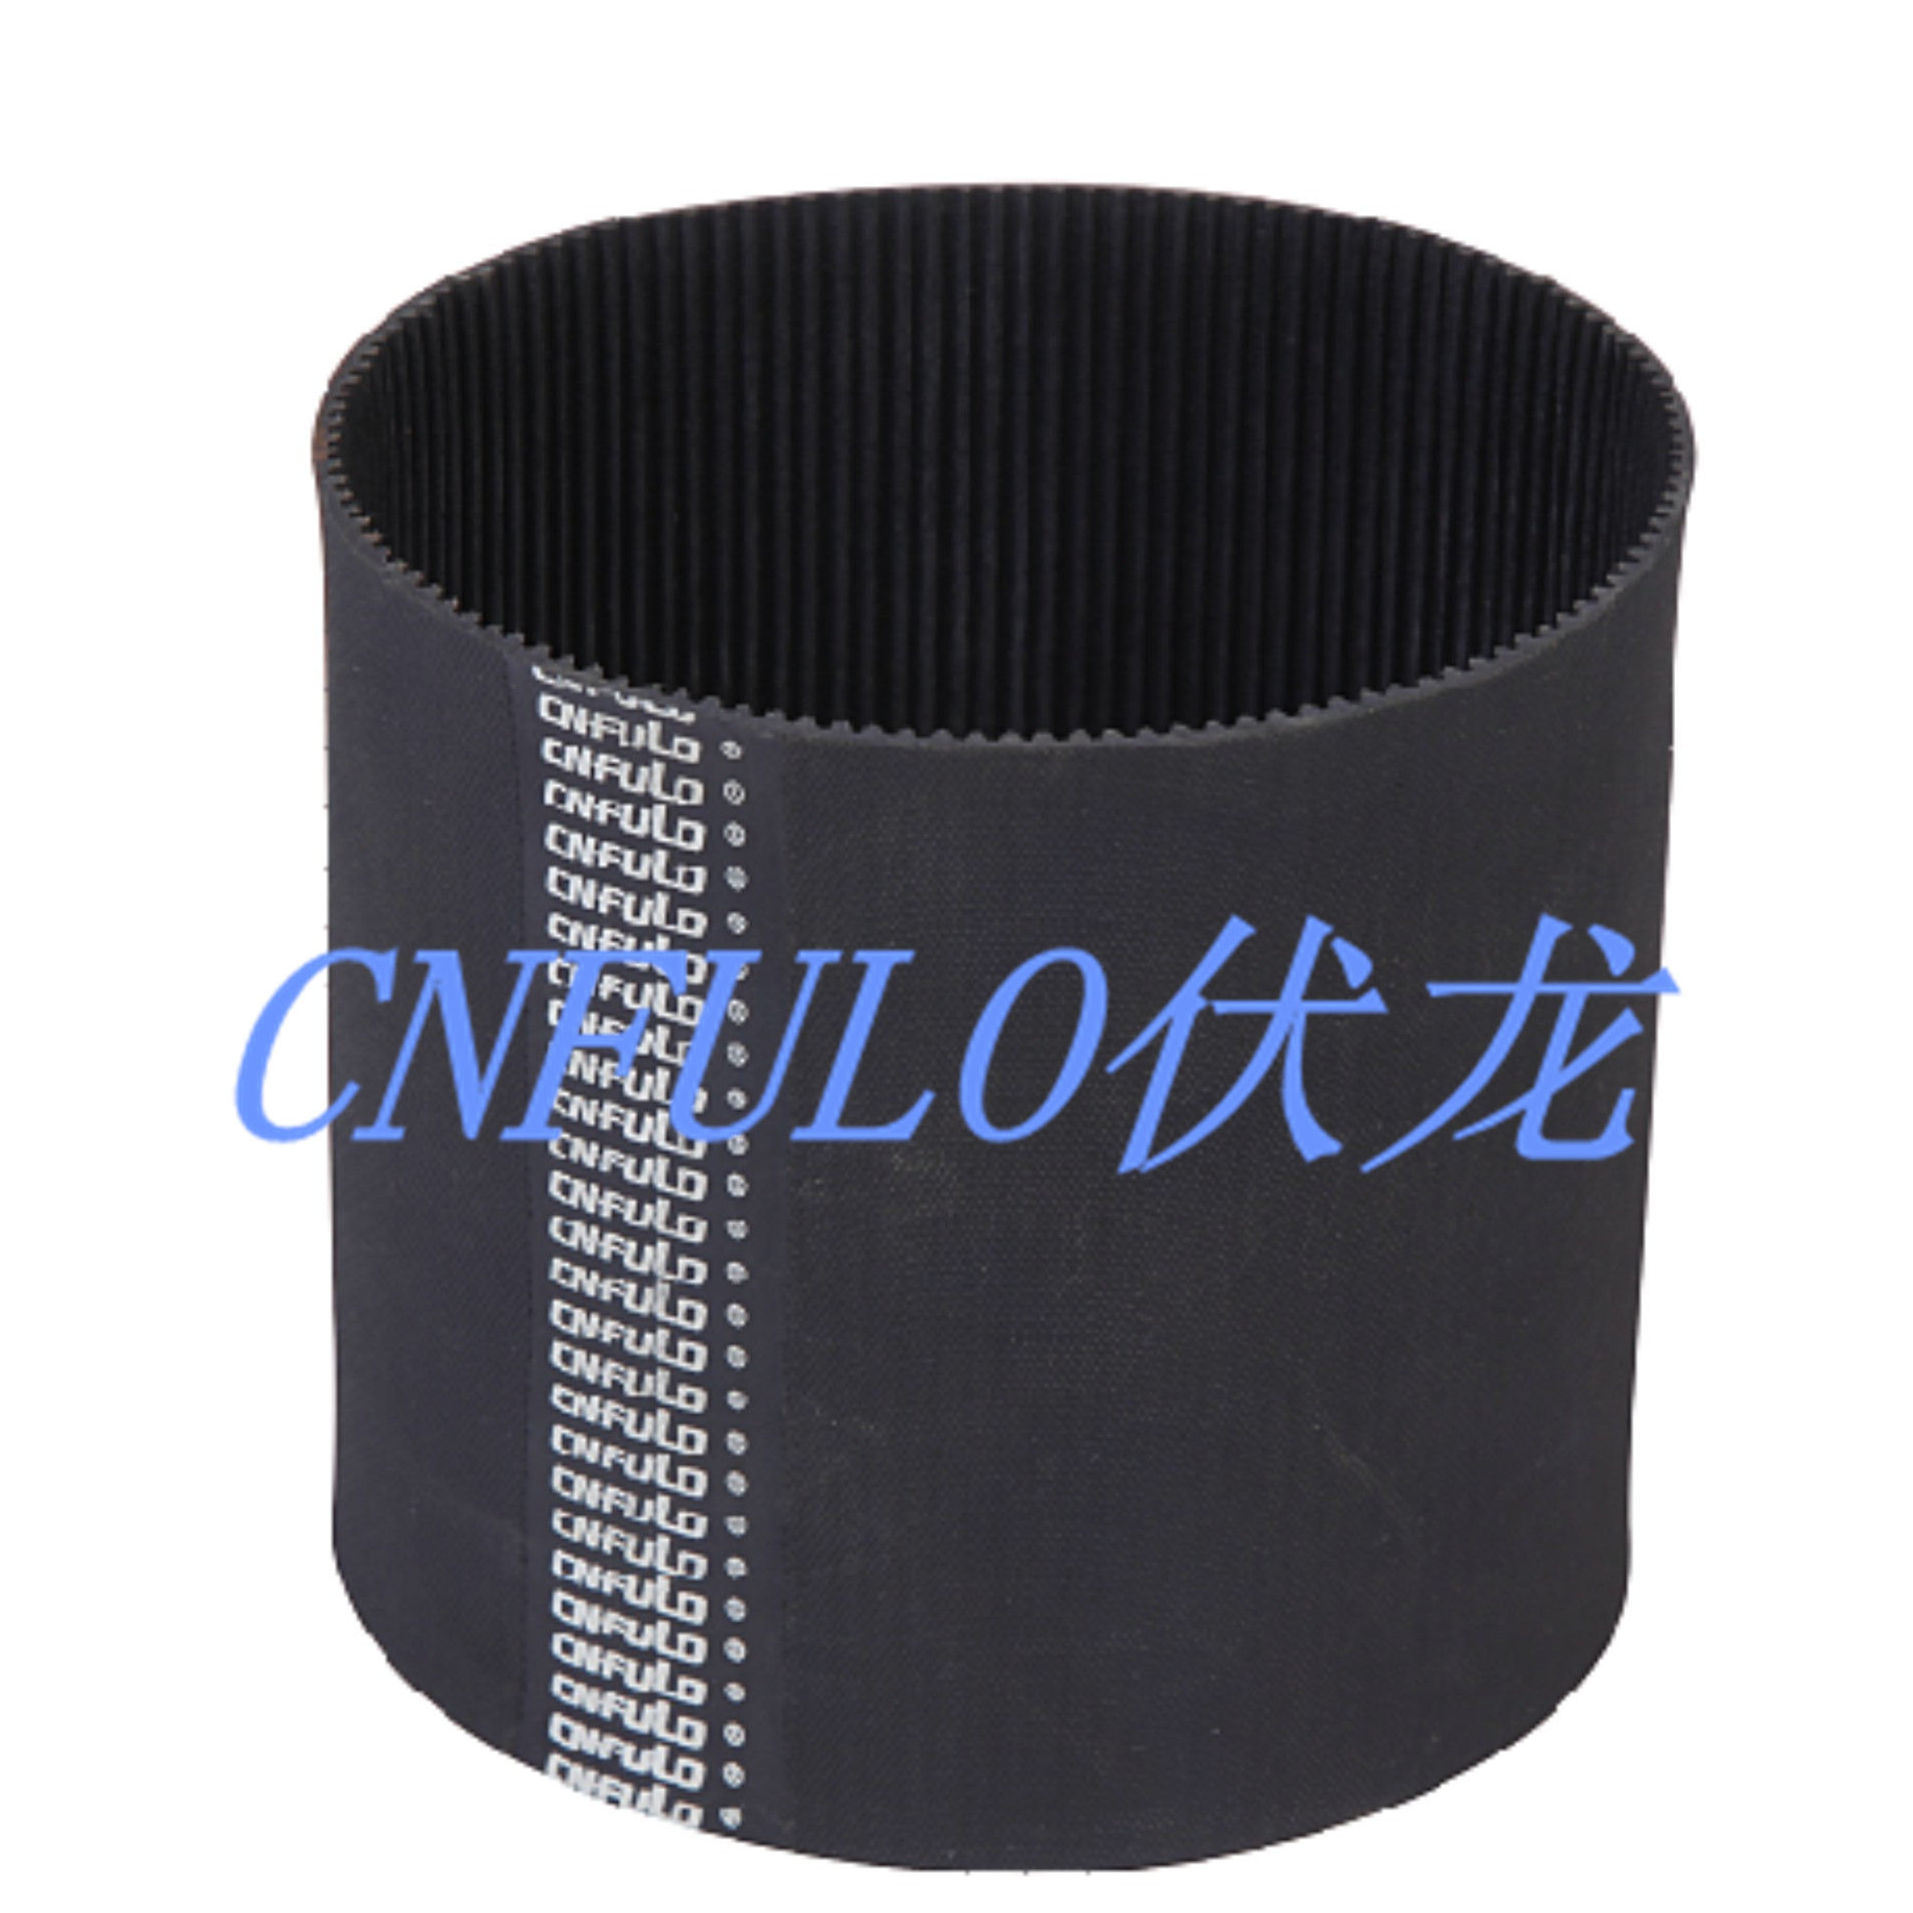 Industrial Rubber Timing Belt, Power Transmission/Texitle/Printer Belt, 824mxl